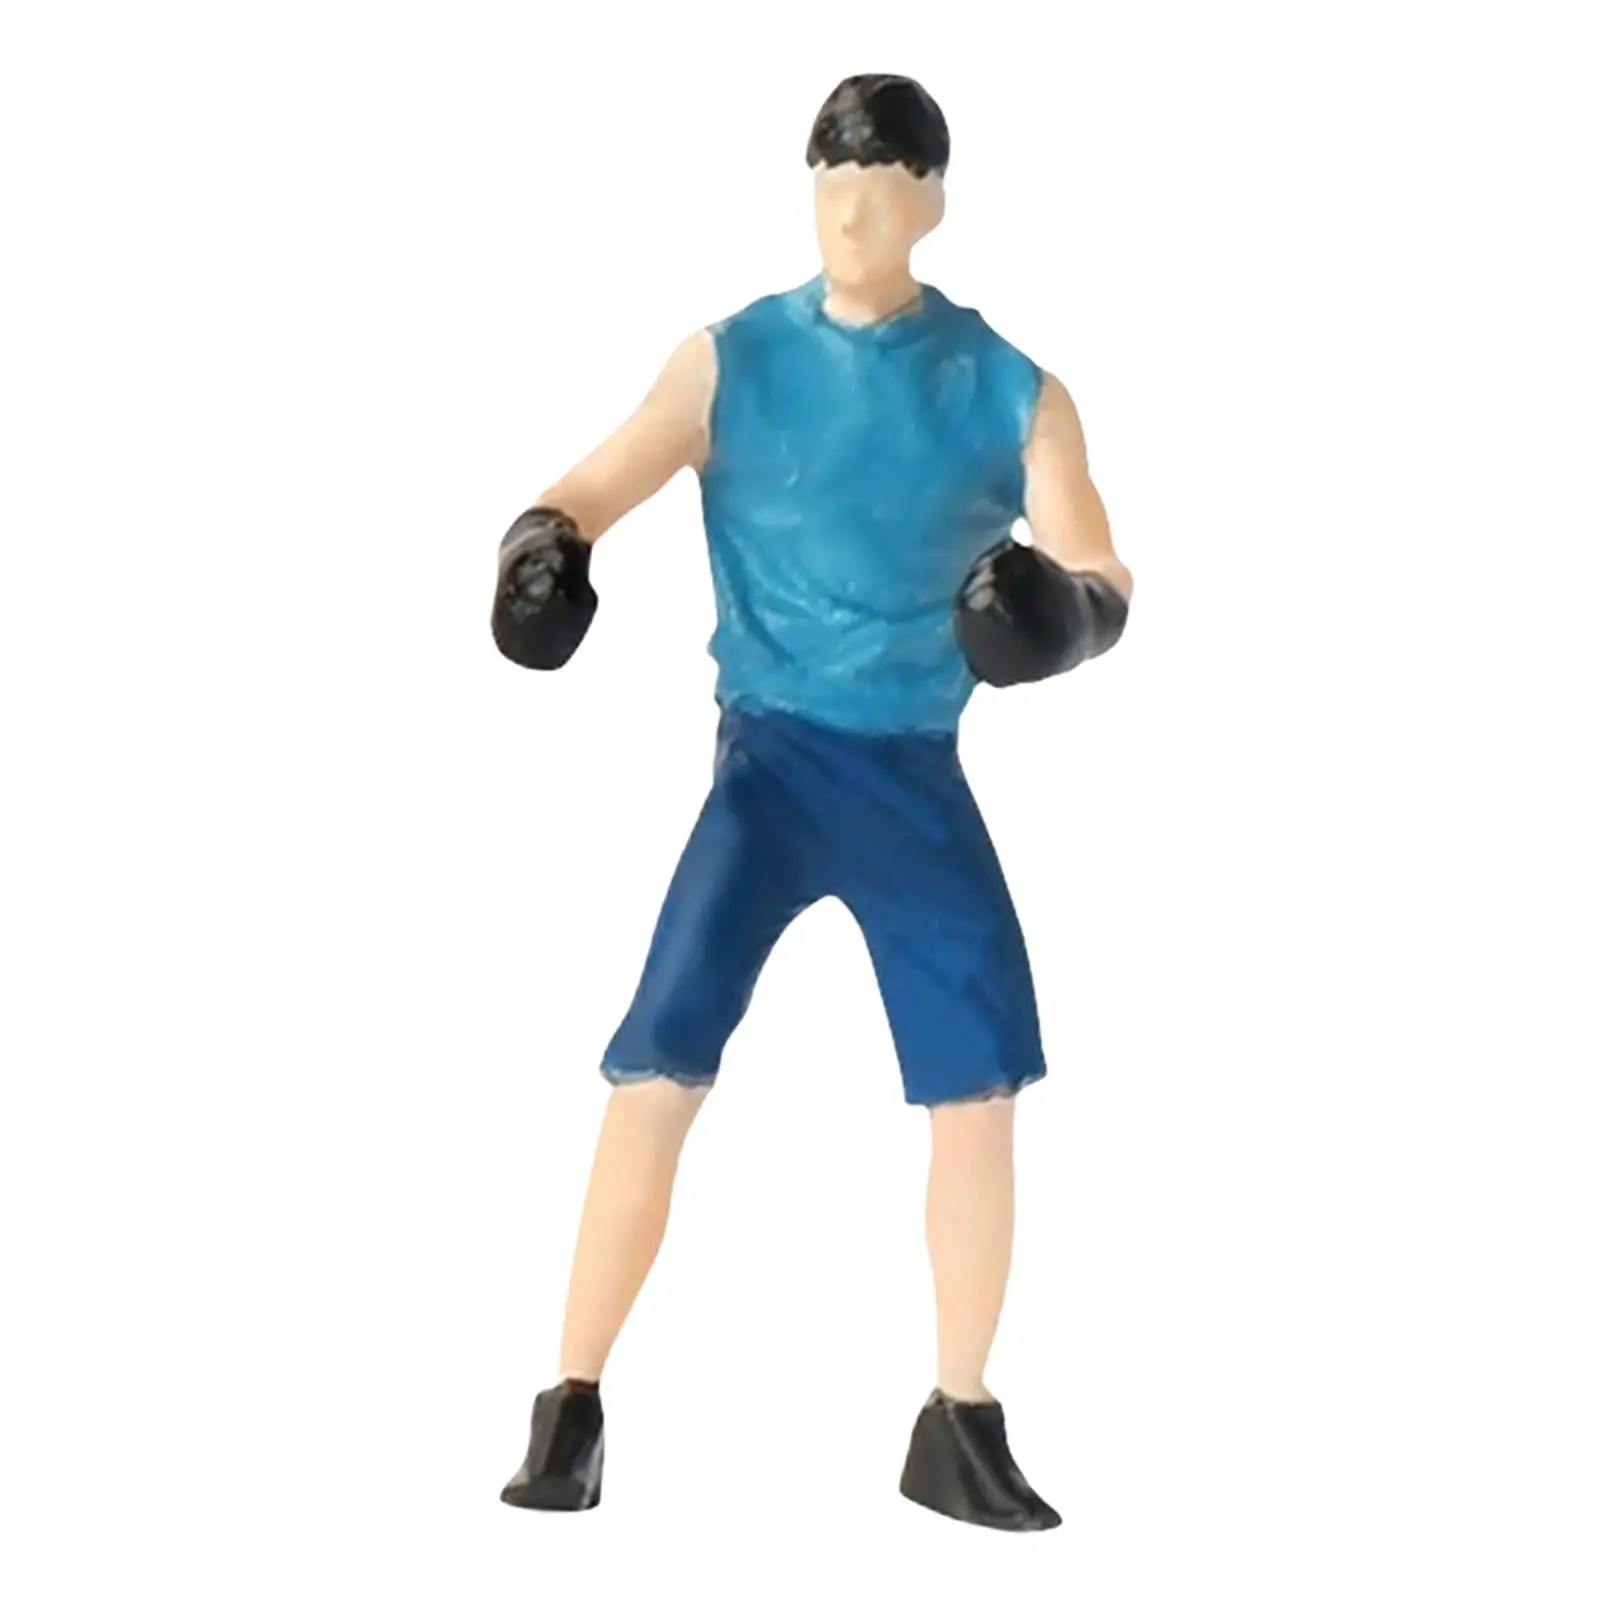 1:64 Scale Models Figurine Boxing Man Figurines Desk Decoration for Diorama